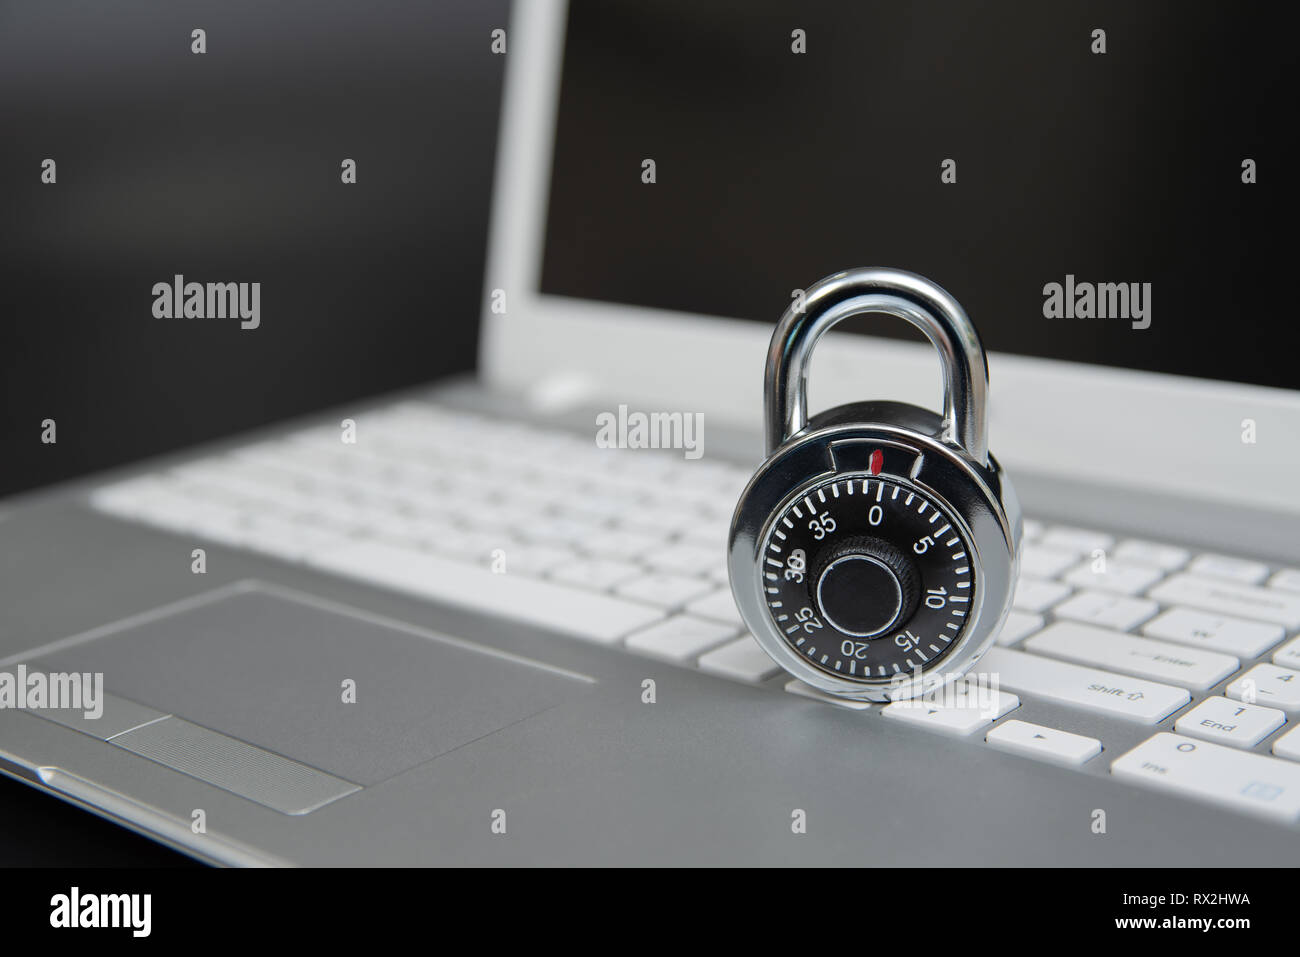 Computer security concept, padlock on laptop keyboard. Stock Photo